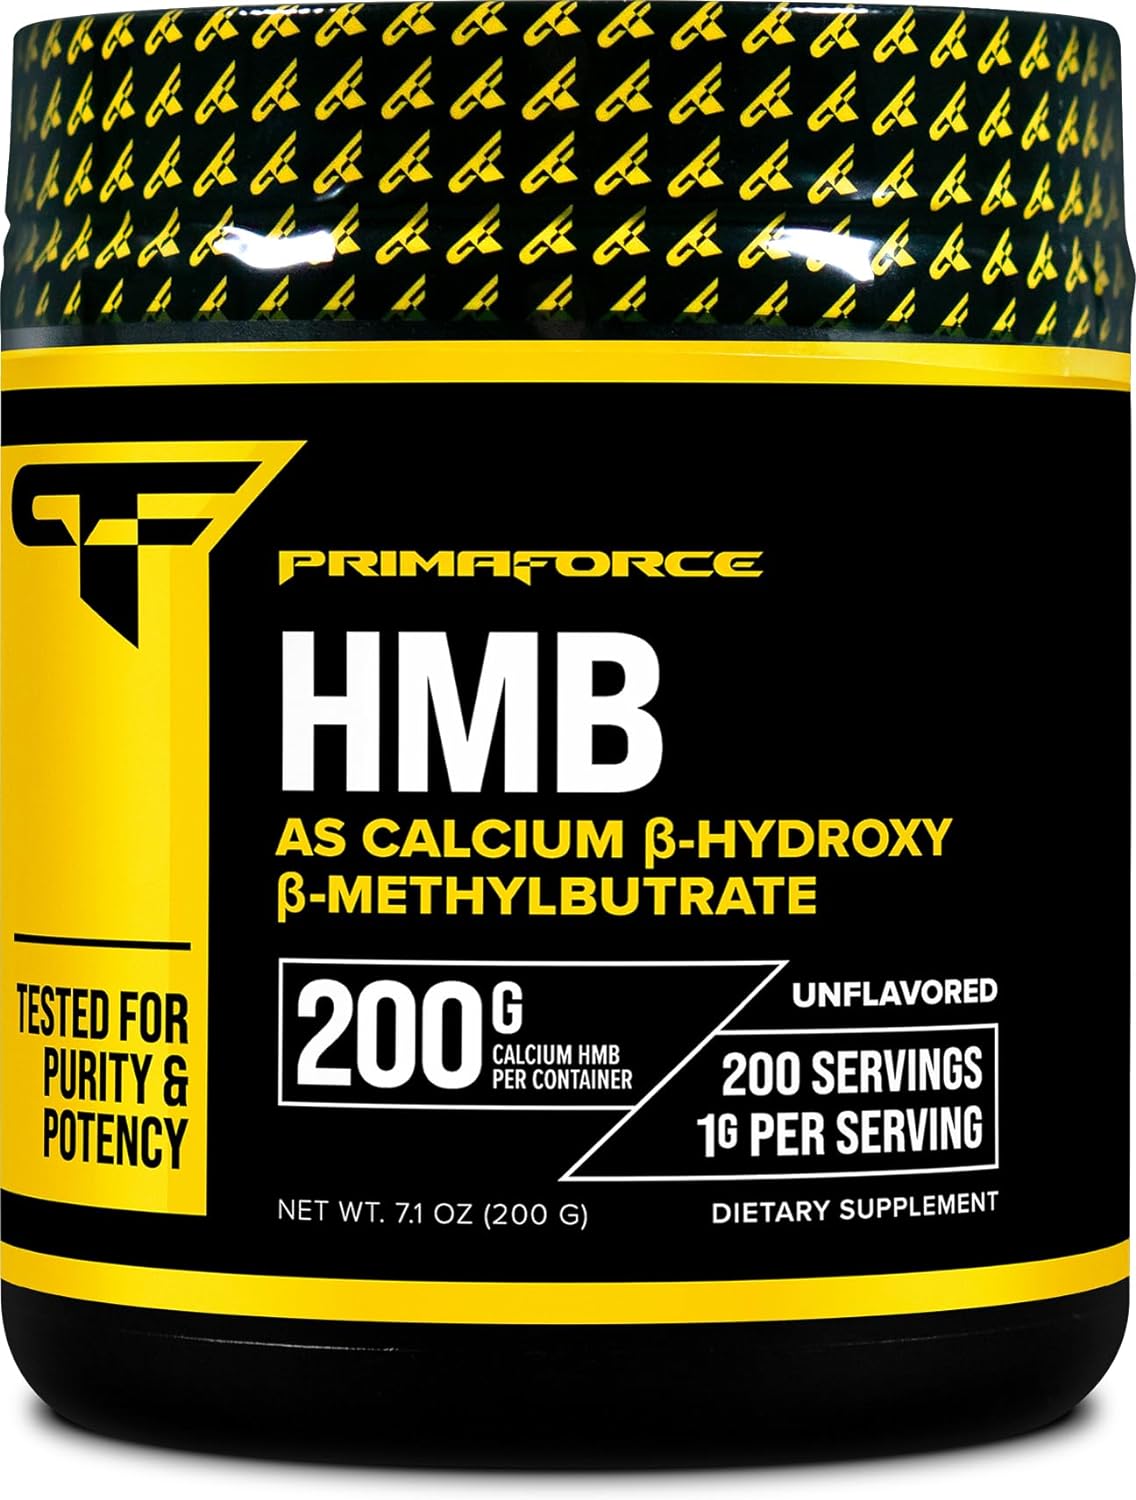 Primaforce HMB Supplement Powder (200g) (Unflavored) - Pure Calcium Be